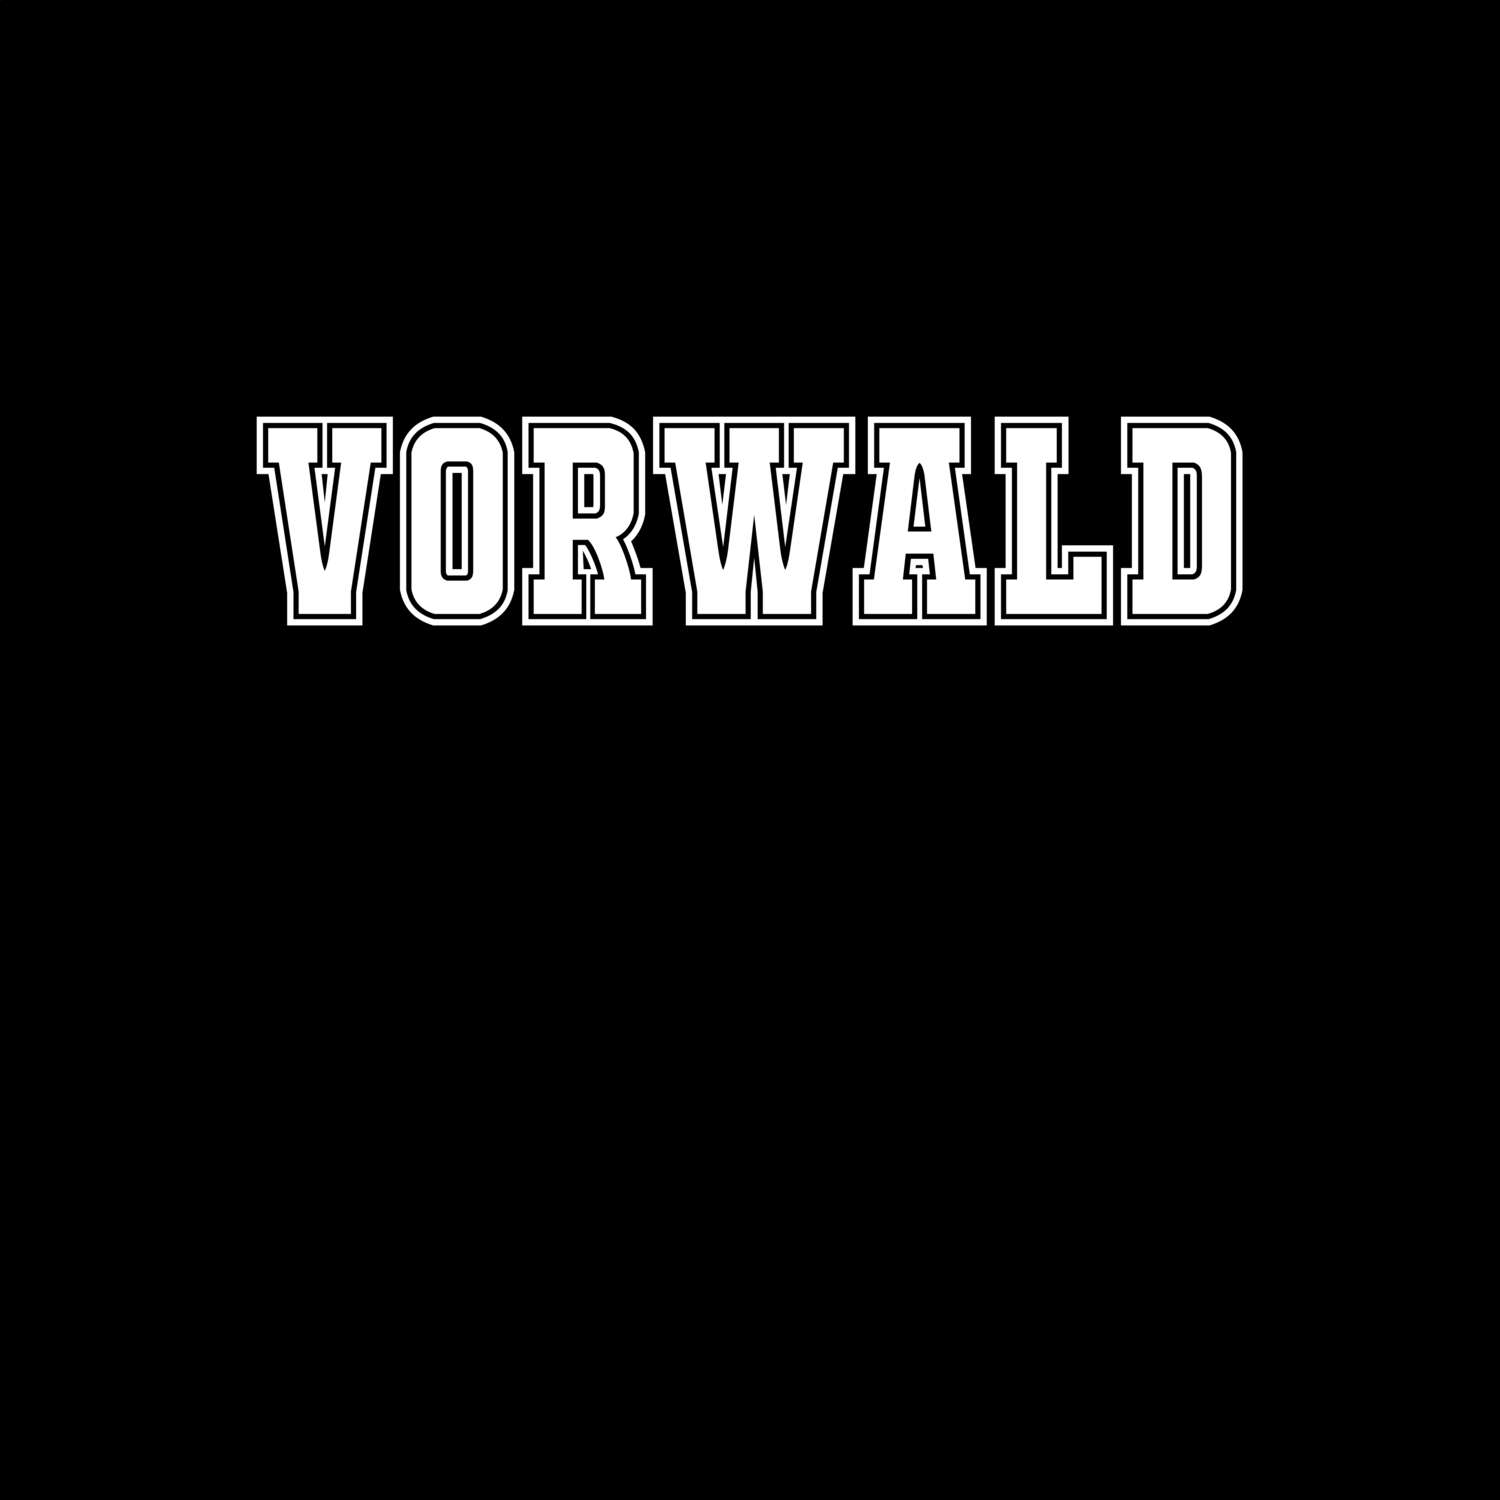 Vorwald T-Shirt »Classic«